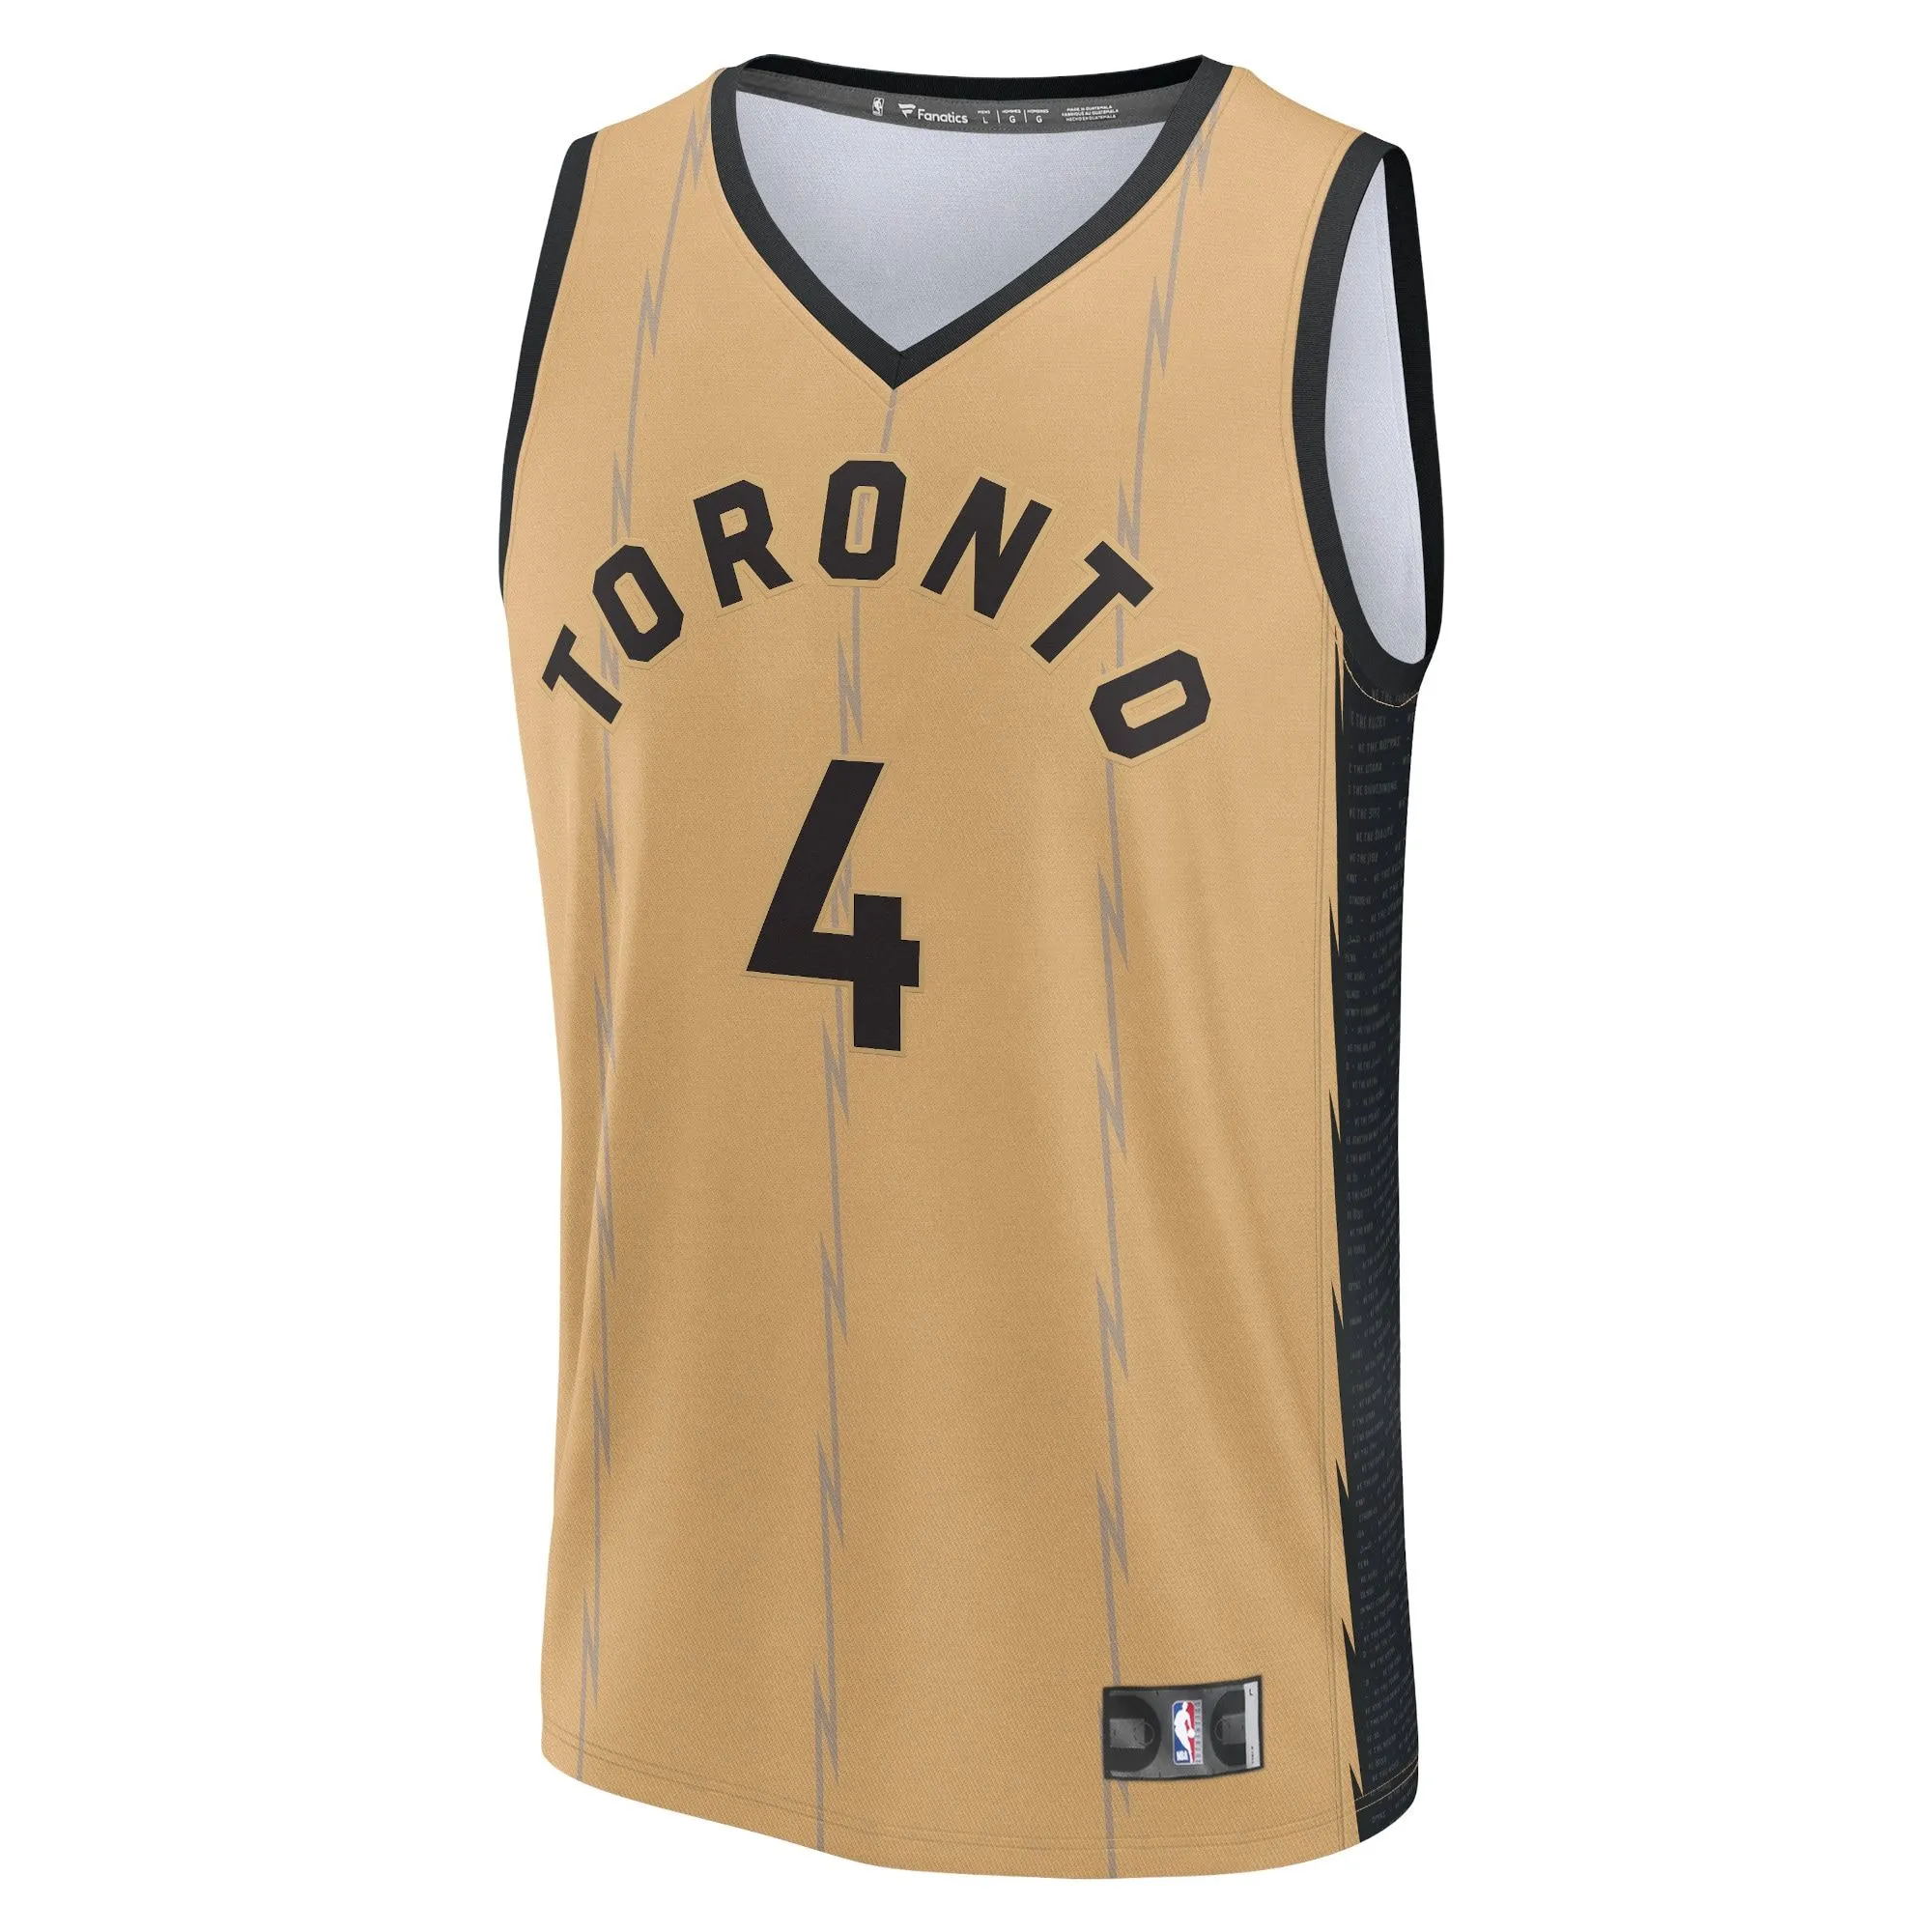 Scottie Barnes Toronto Raptors Fanatics Branded Fast Break Jersey - Gold - City Edition